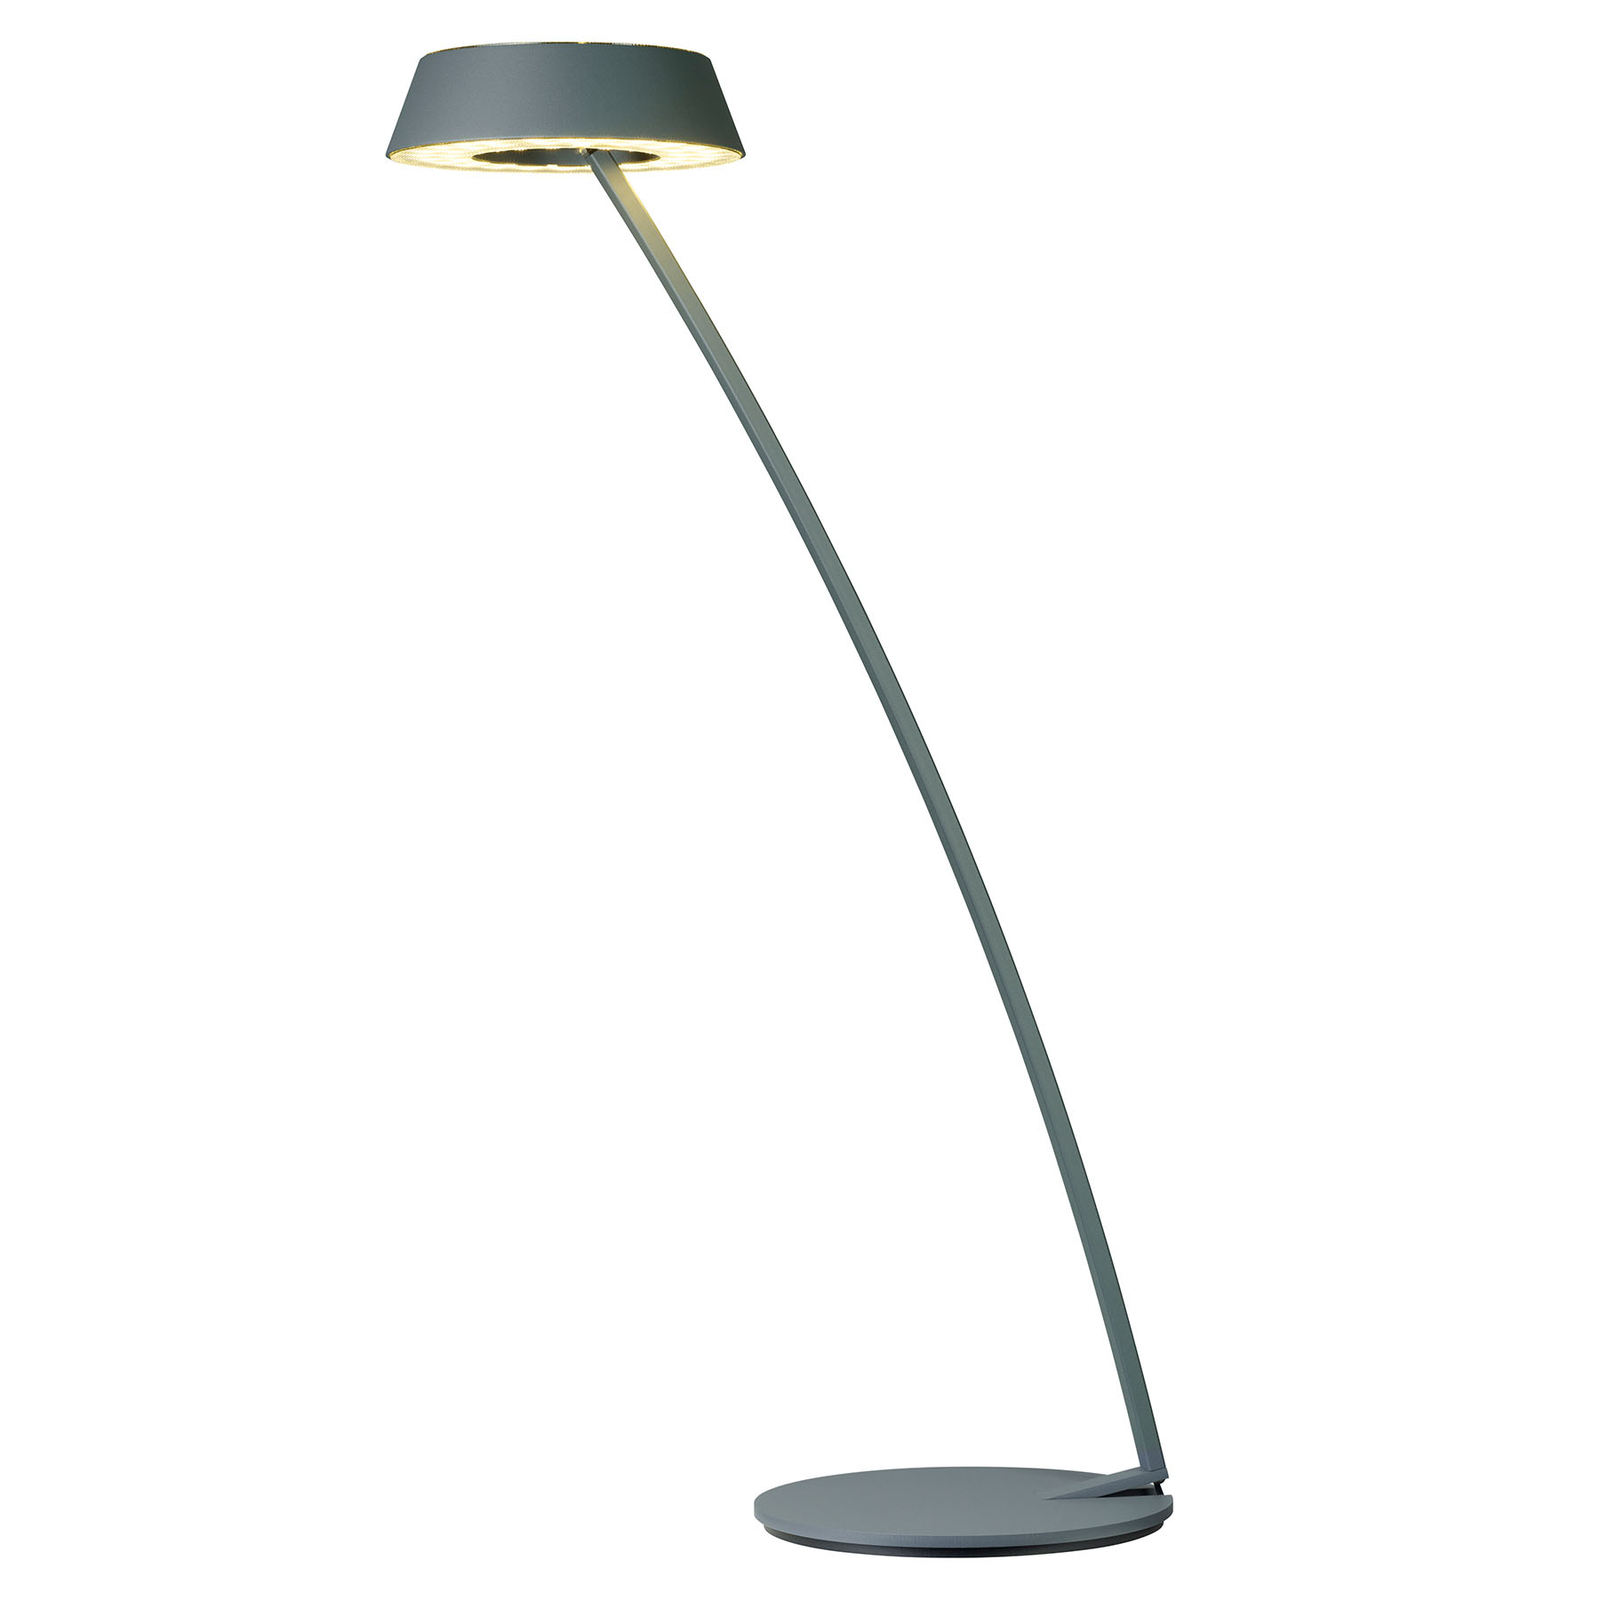 OLIGO Glance lampe à poser LED arquée grise mate